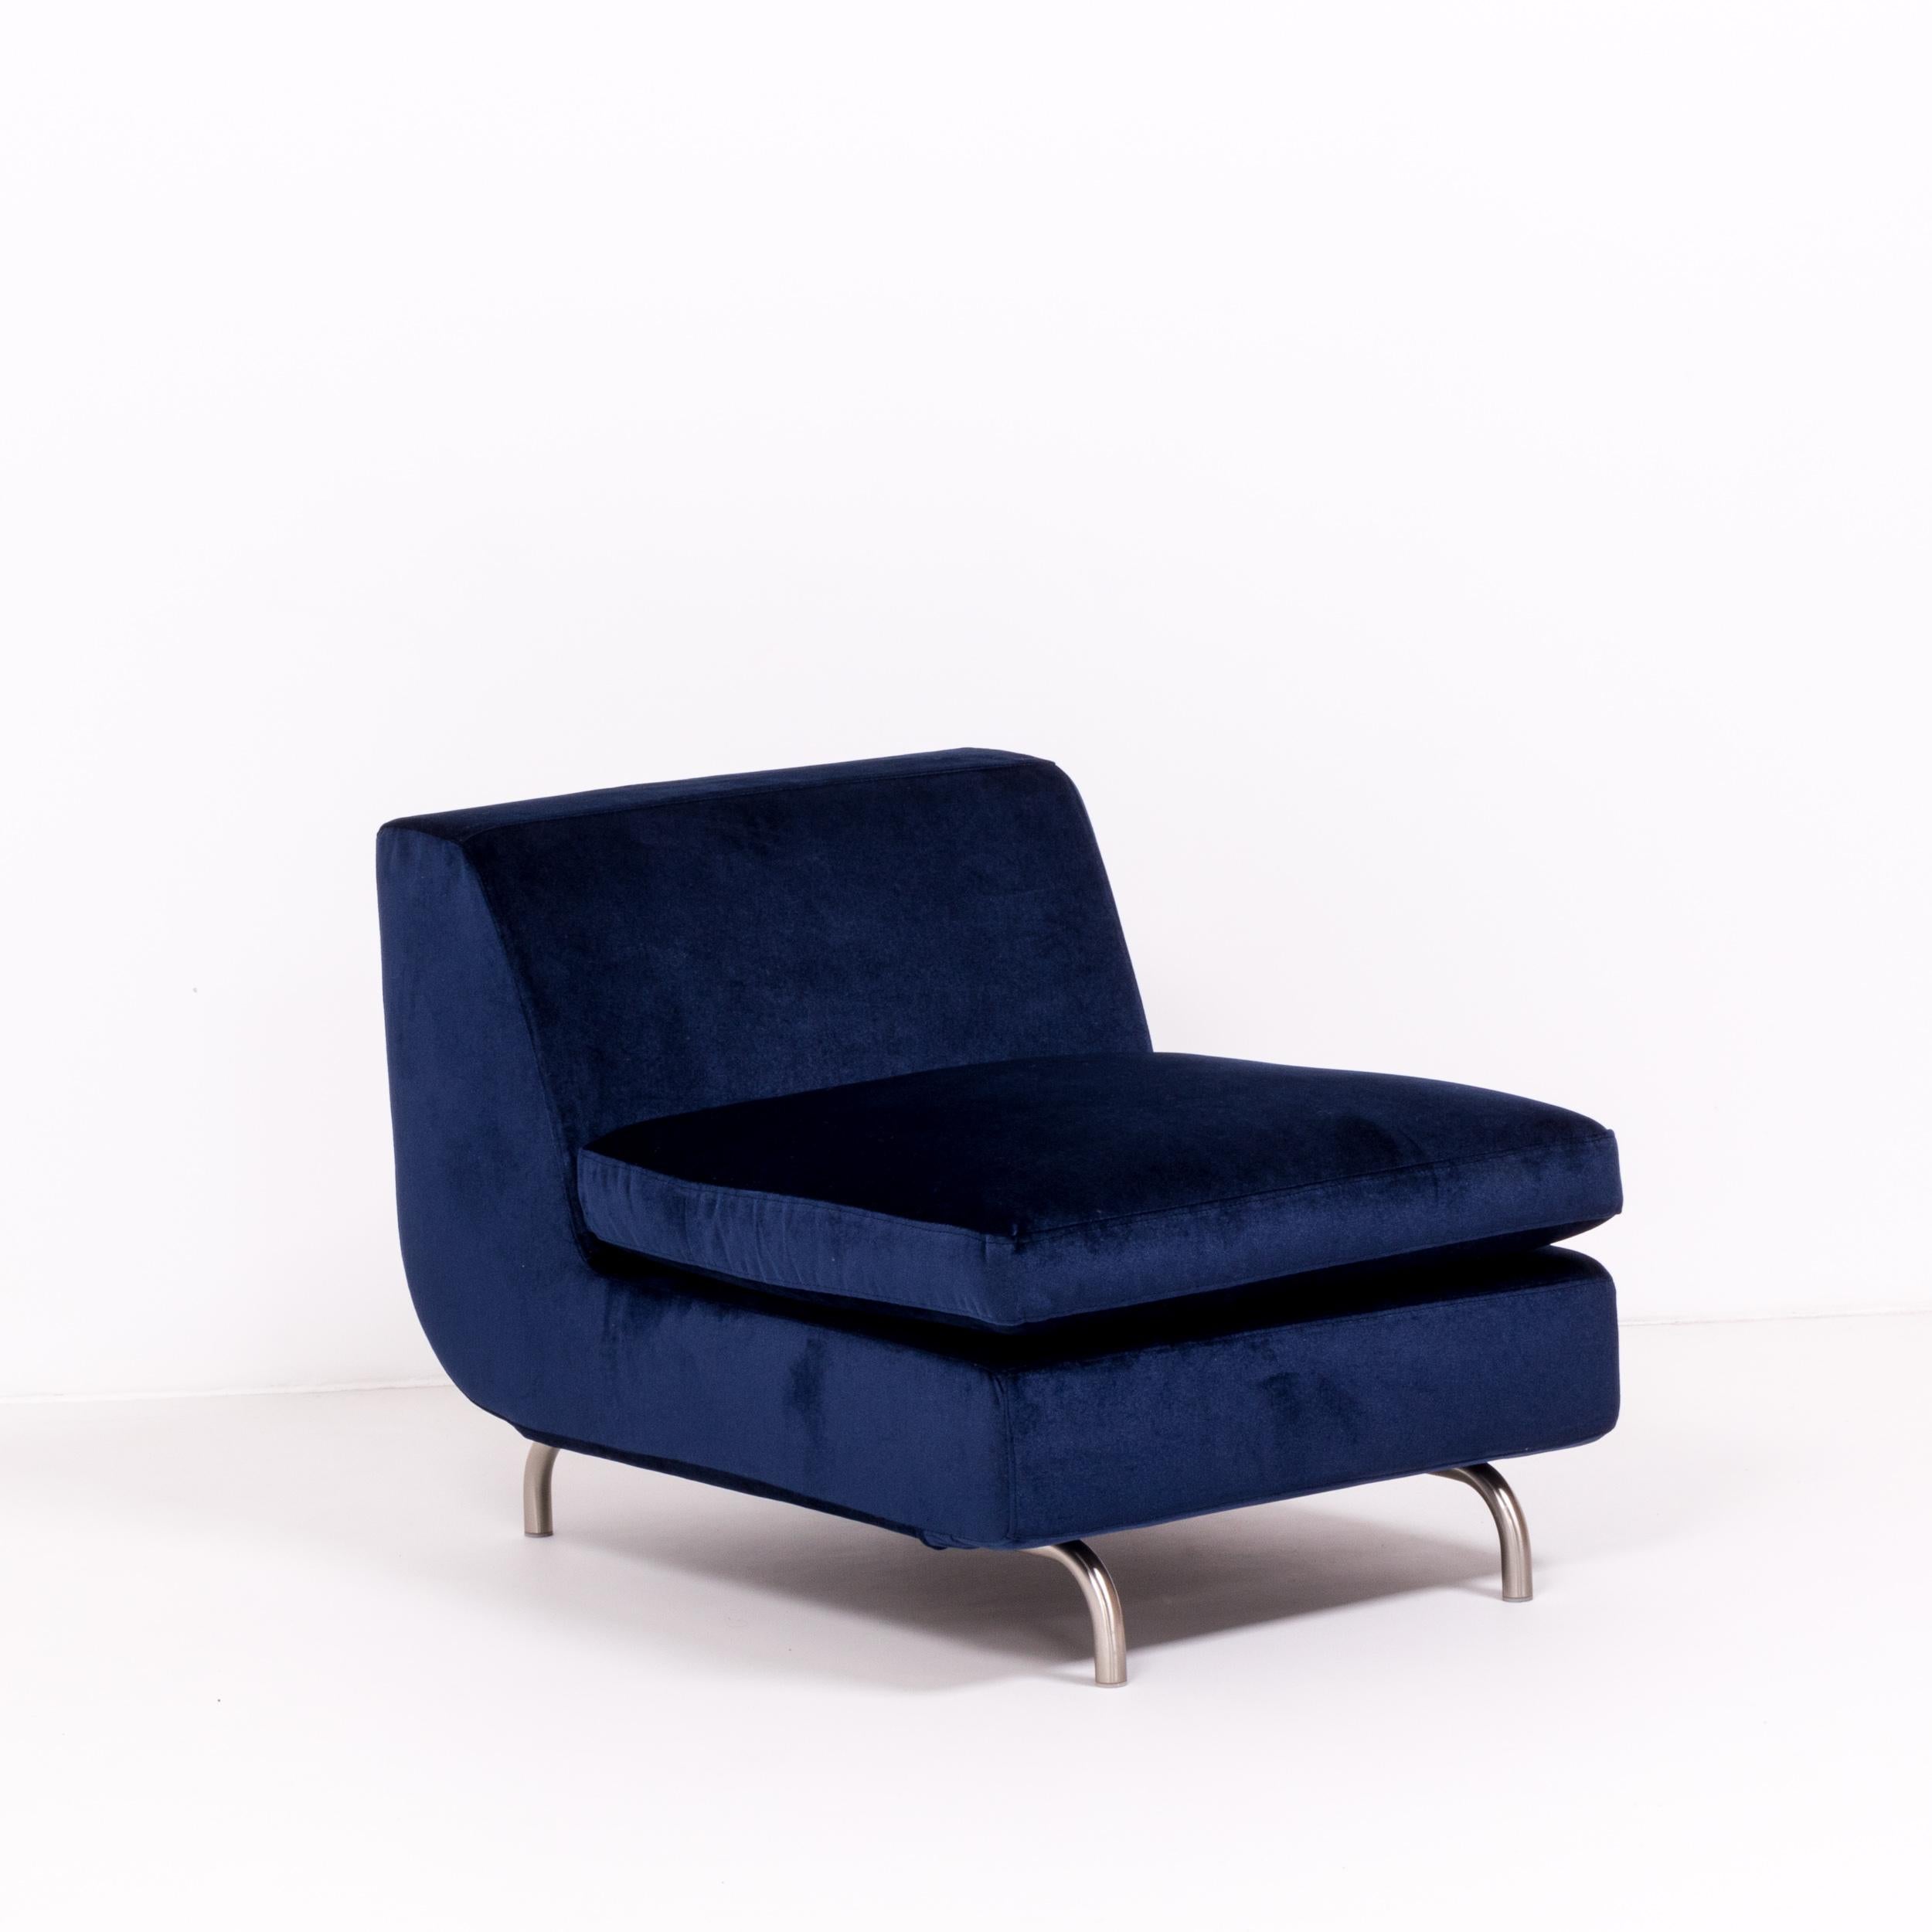 Italian Minotti by Rodolfo Dordoni Dubuffet Navy Blue Lounge Chairs, Set of 2